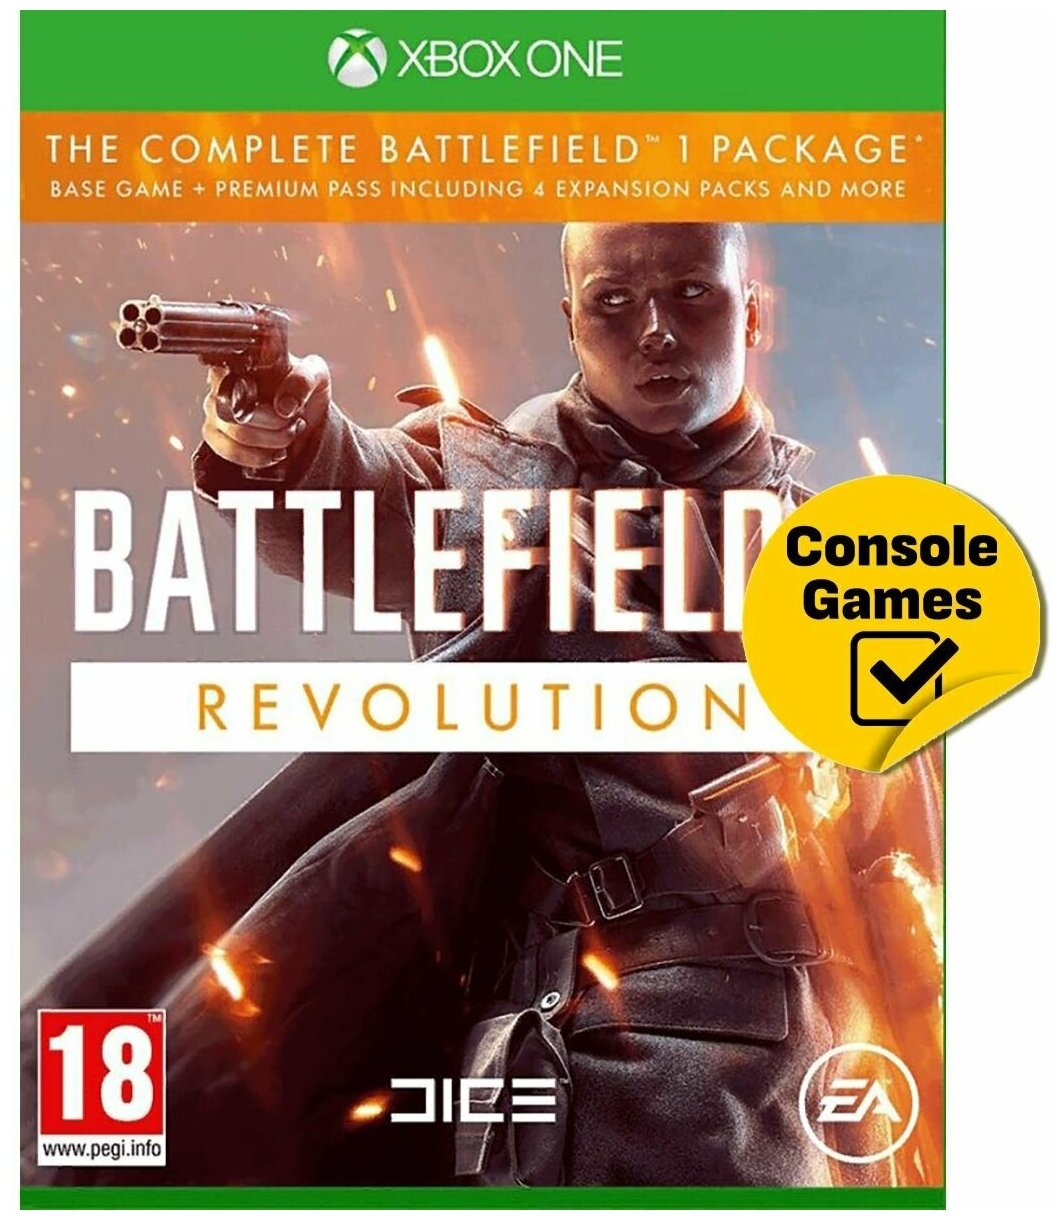 XBOX ONE Battlefield 1 Революция (русские субтитры)